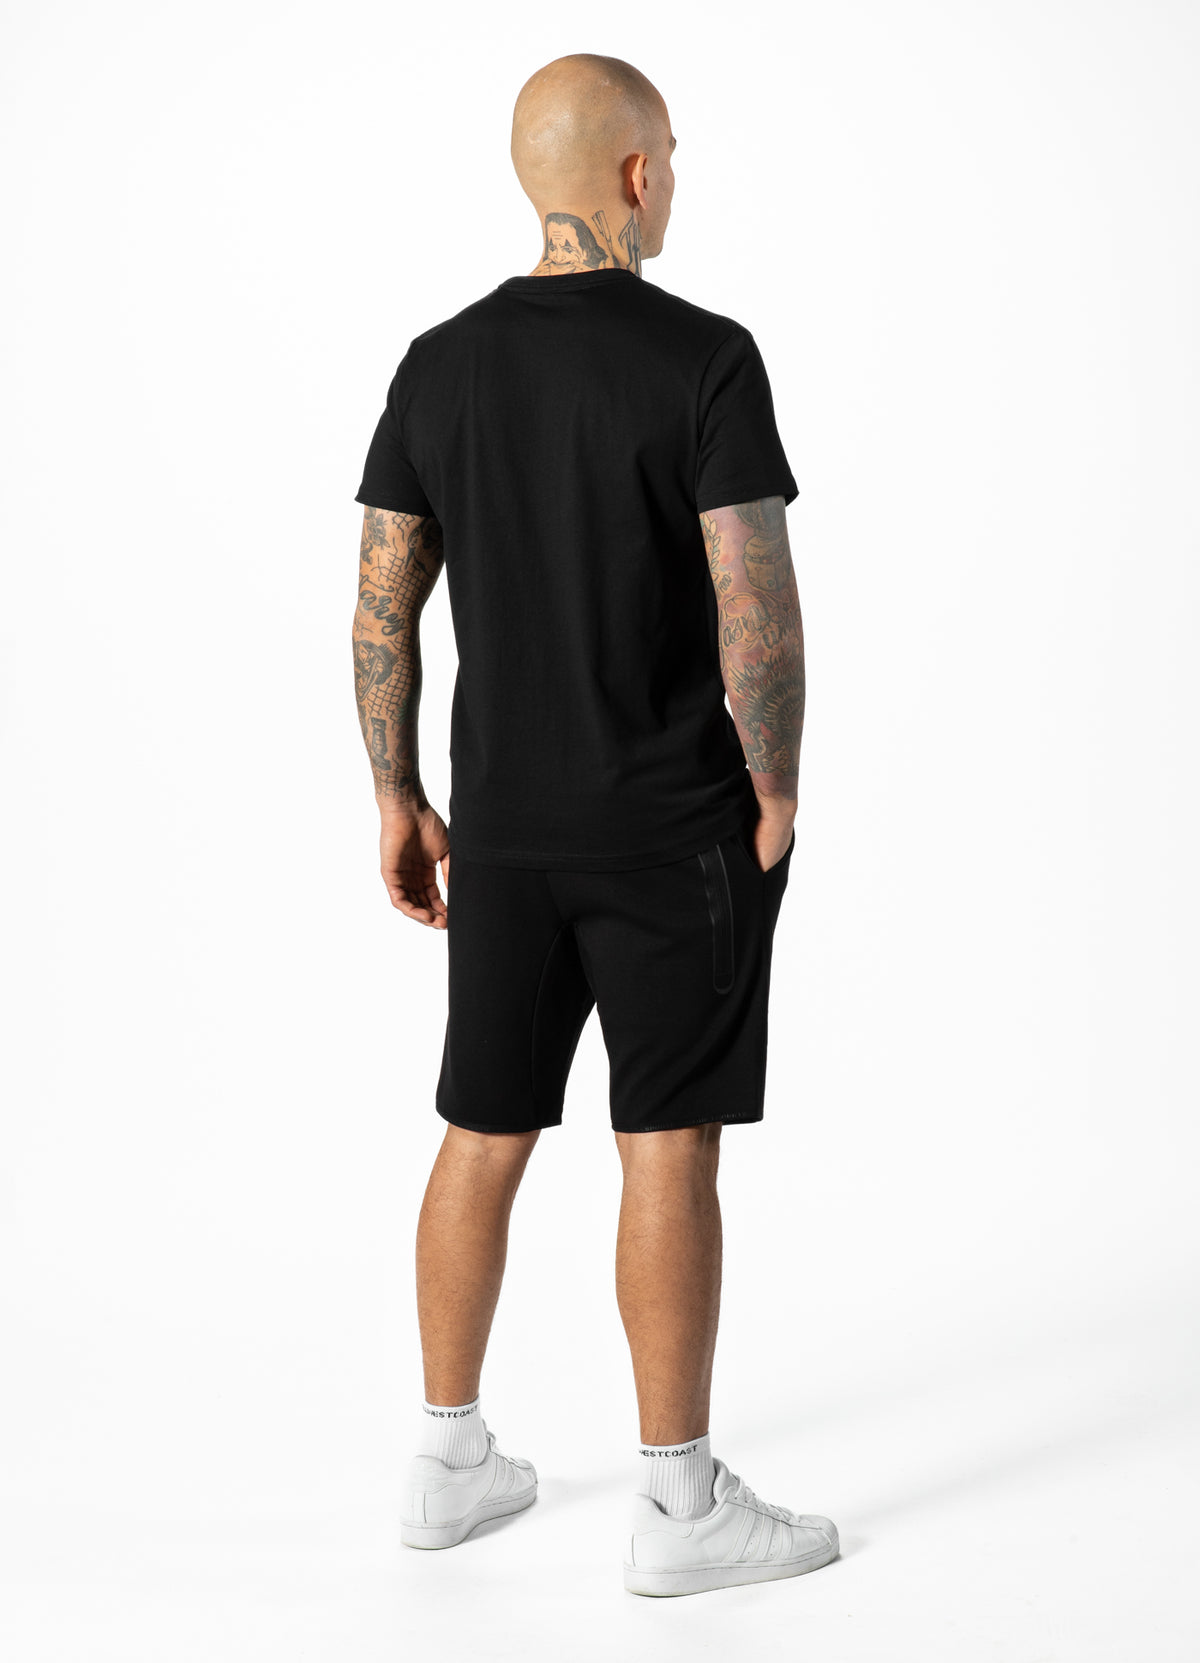 DOLPHIN Black Shorts - Pitbullstore.eu